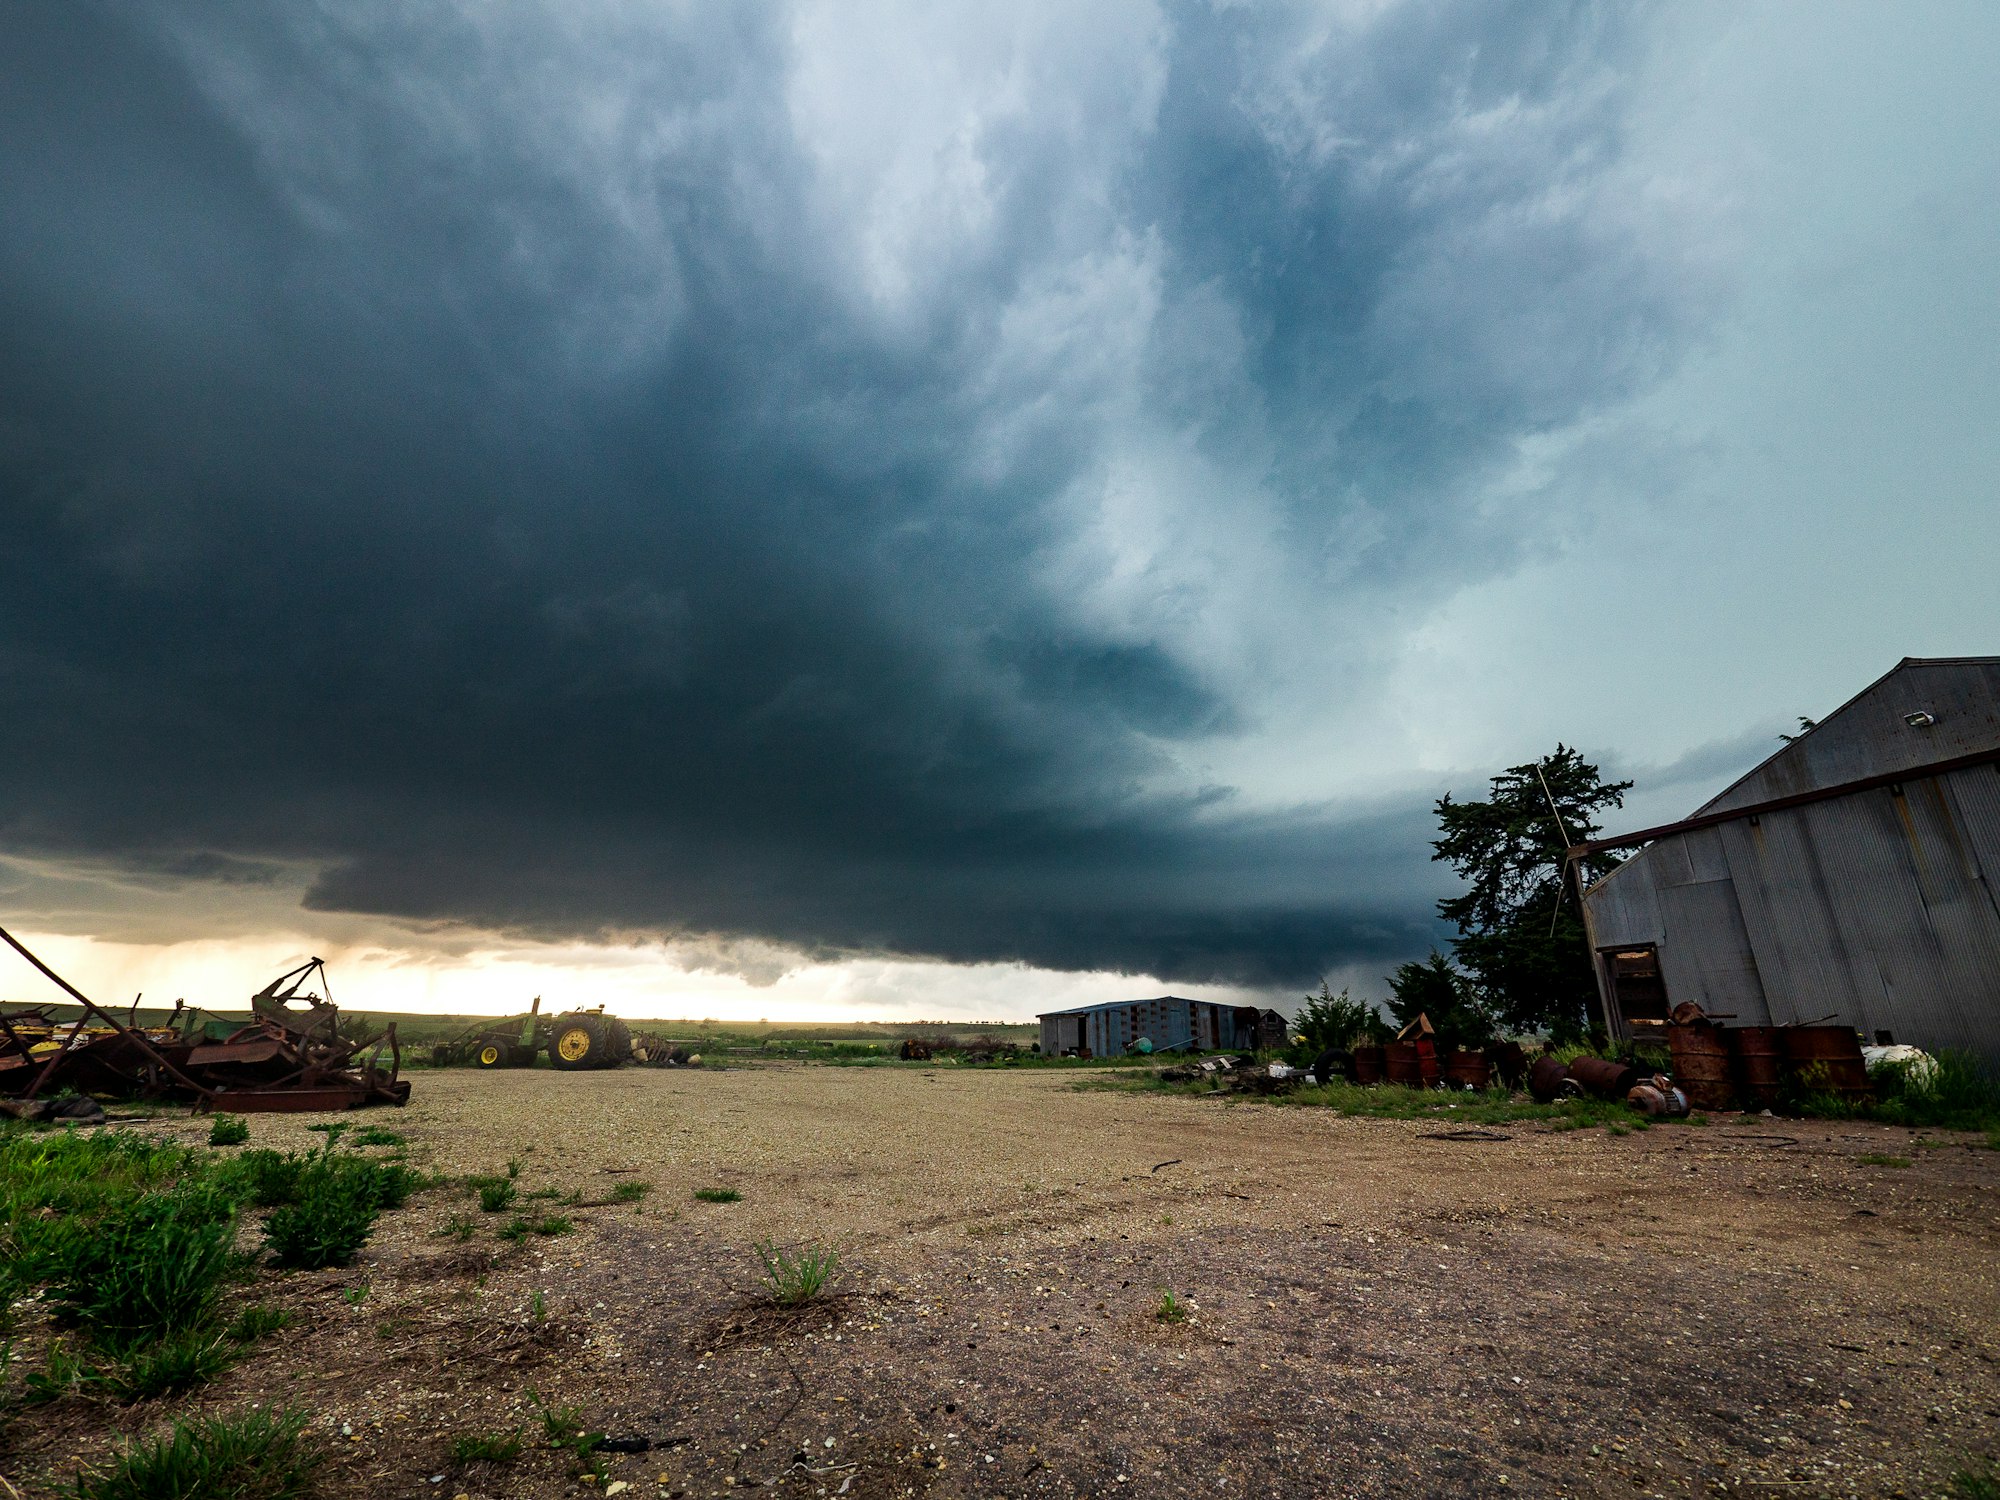 Supercell thunderstorm behind a farmyard in Kansas.